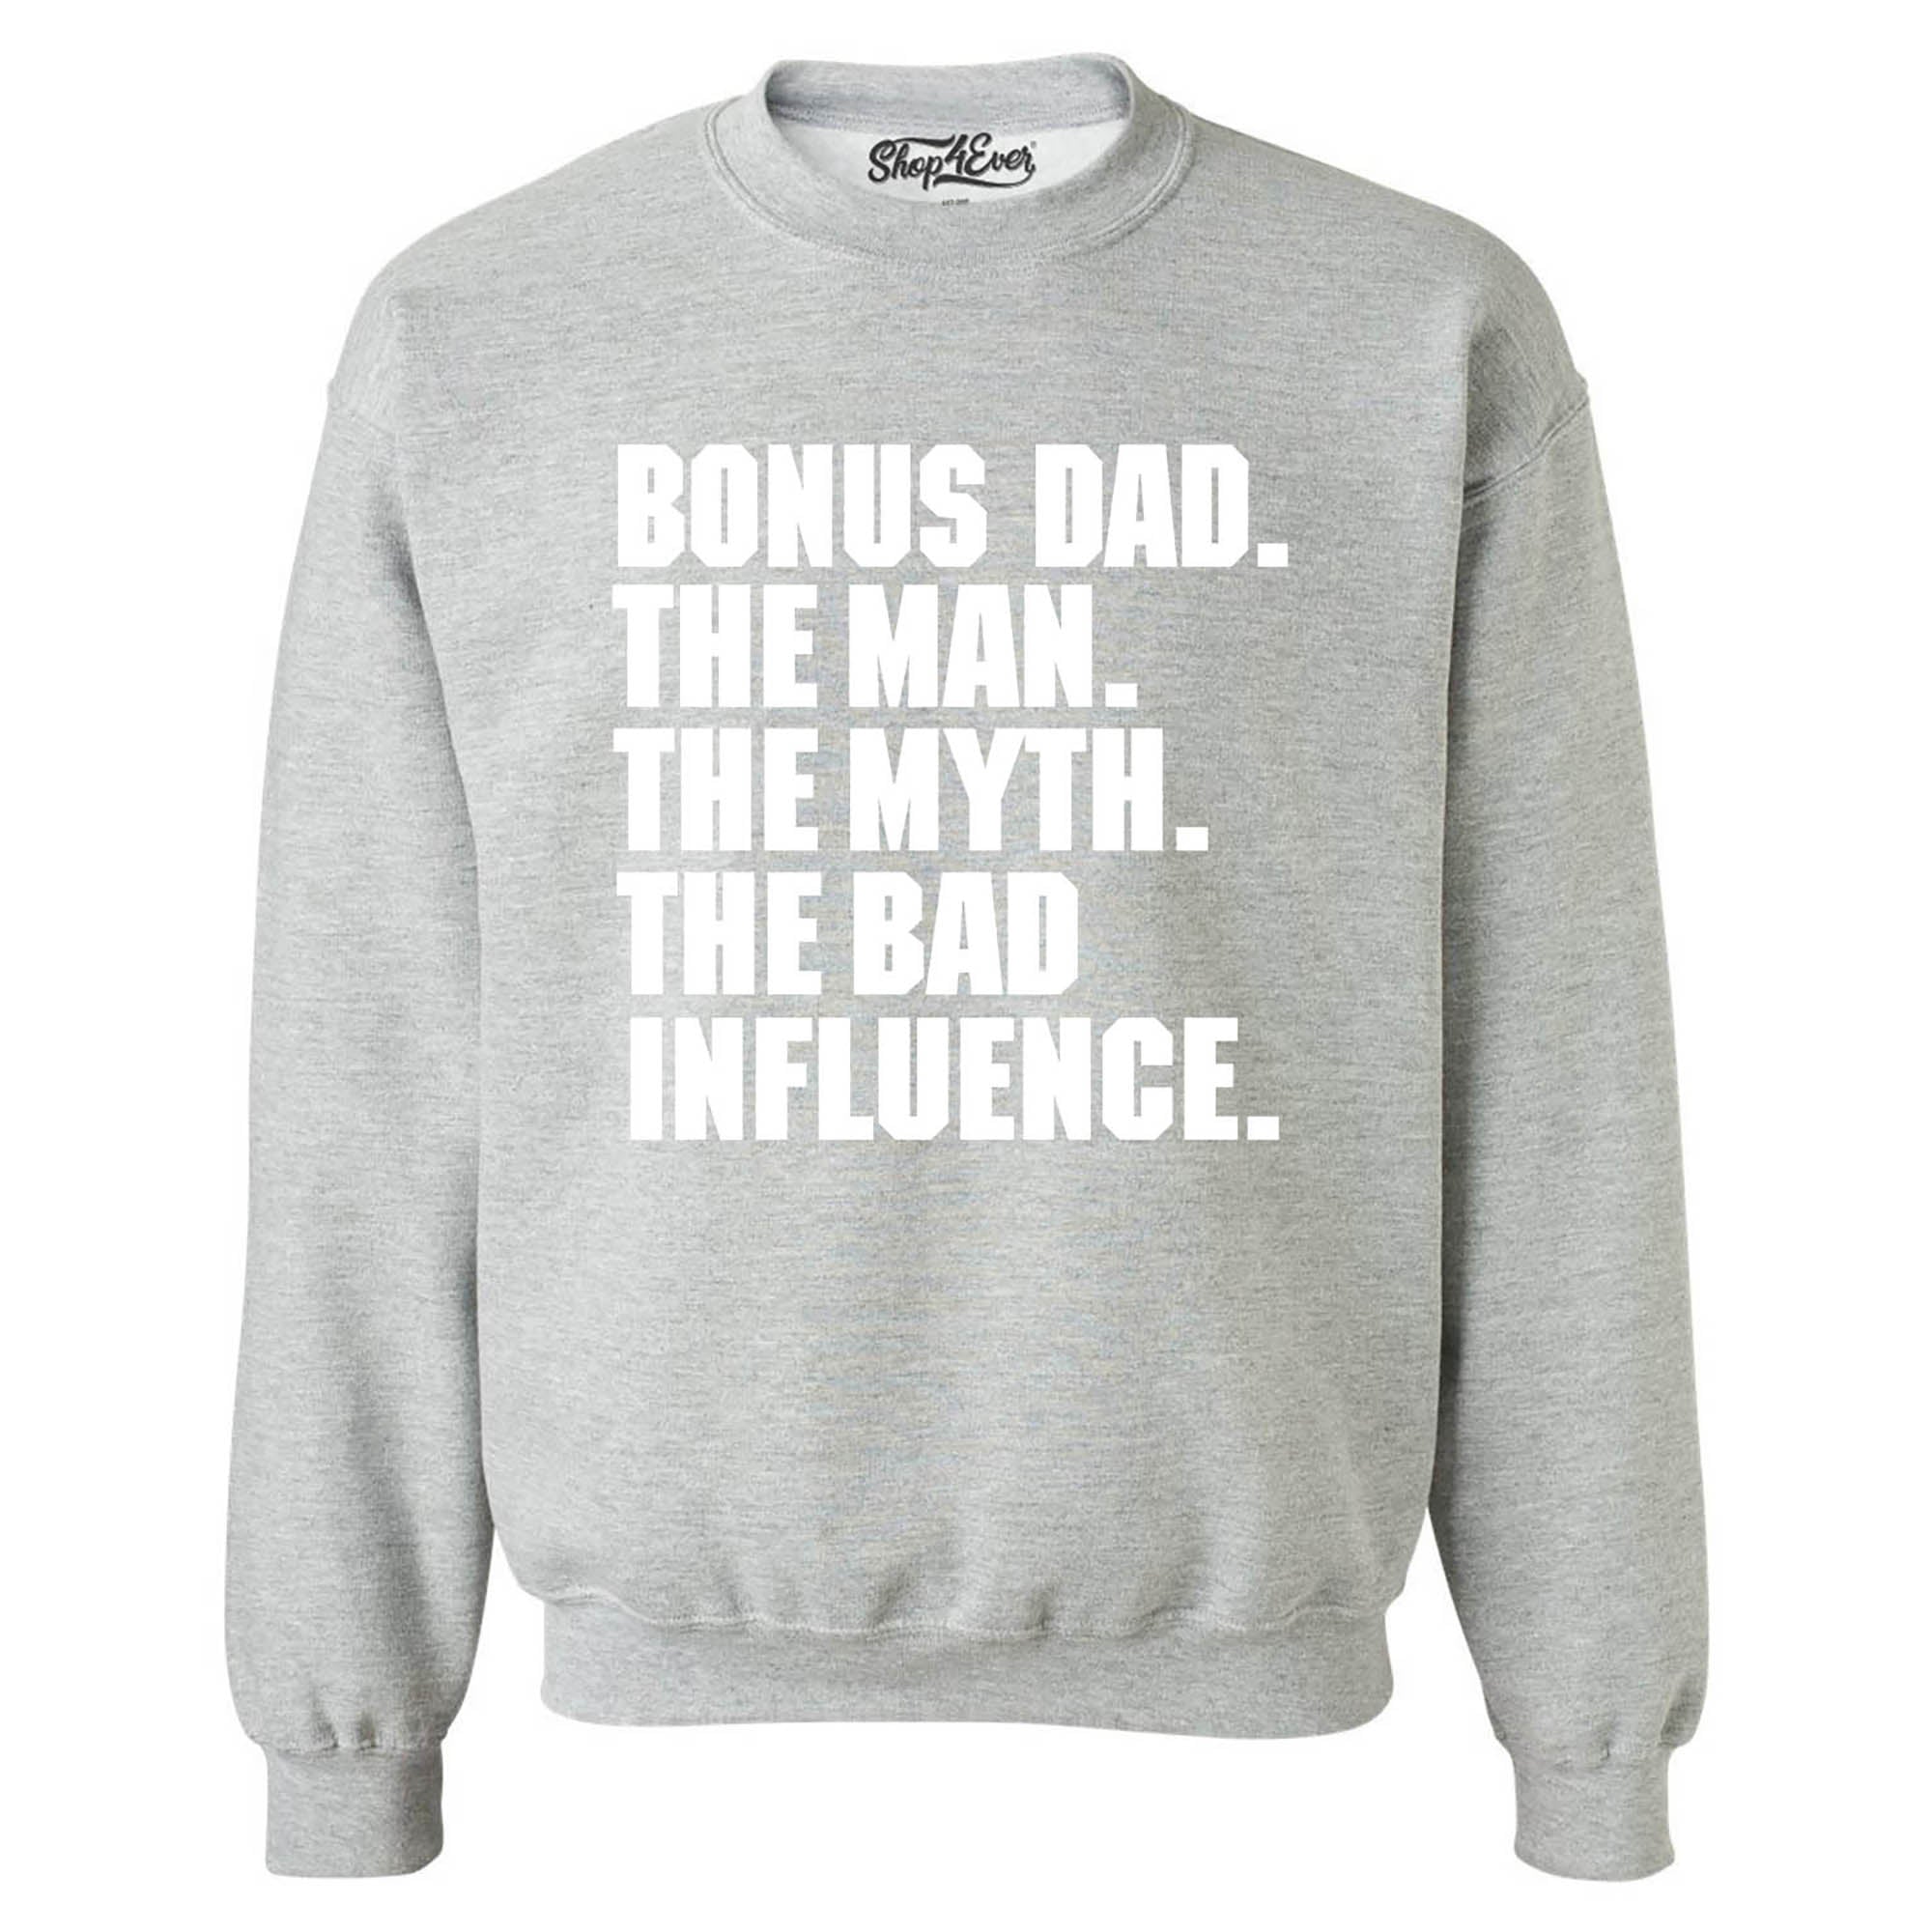 Bonus Dad The Man The Myth The Bad Influence Crewneck Sweatshirts